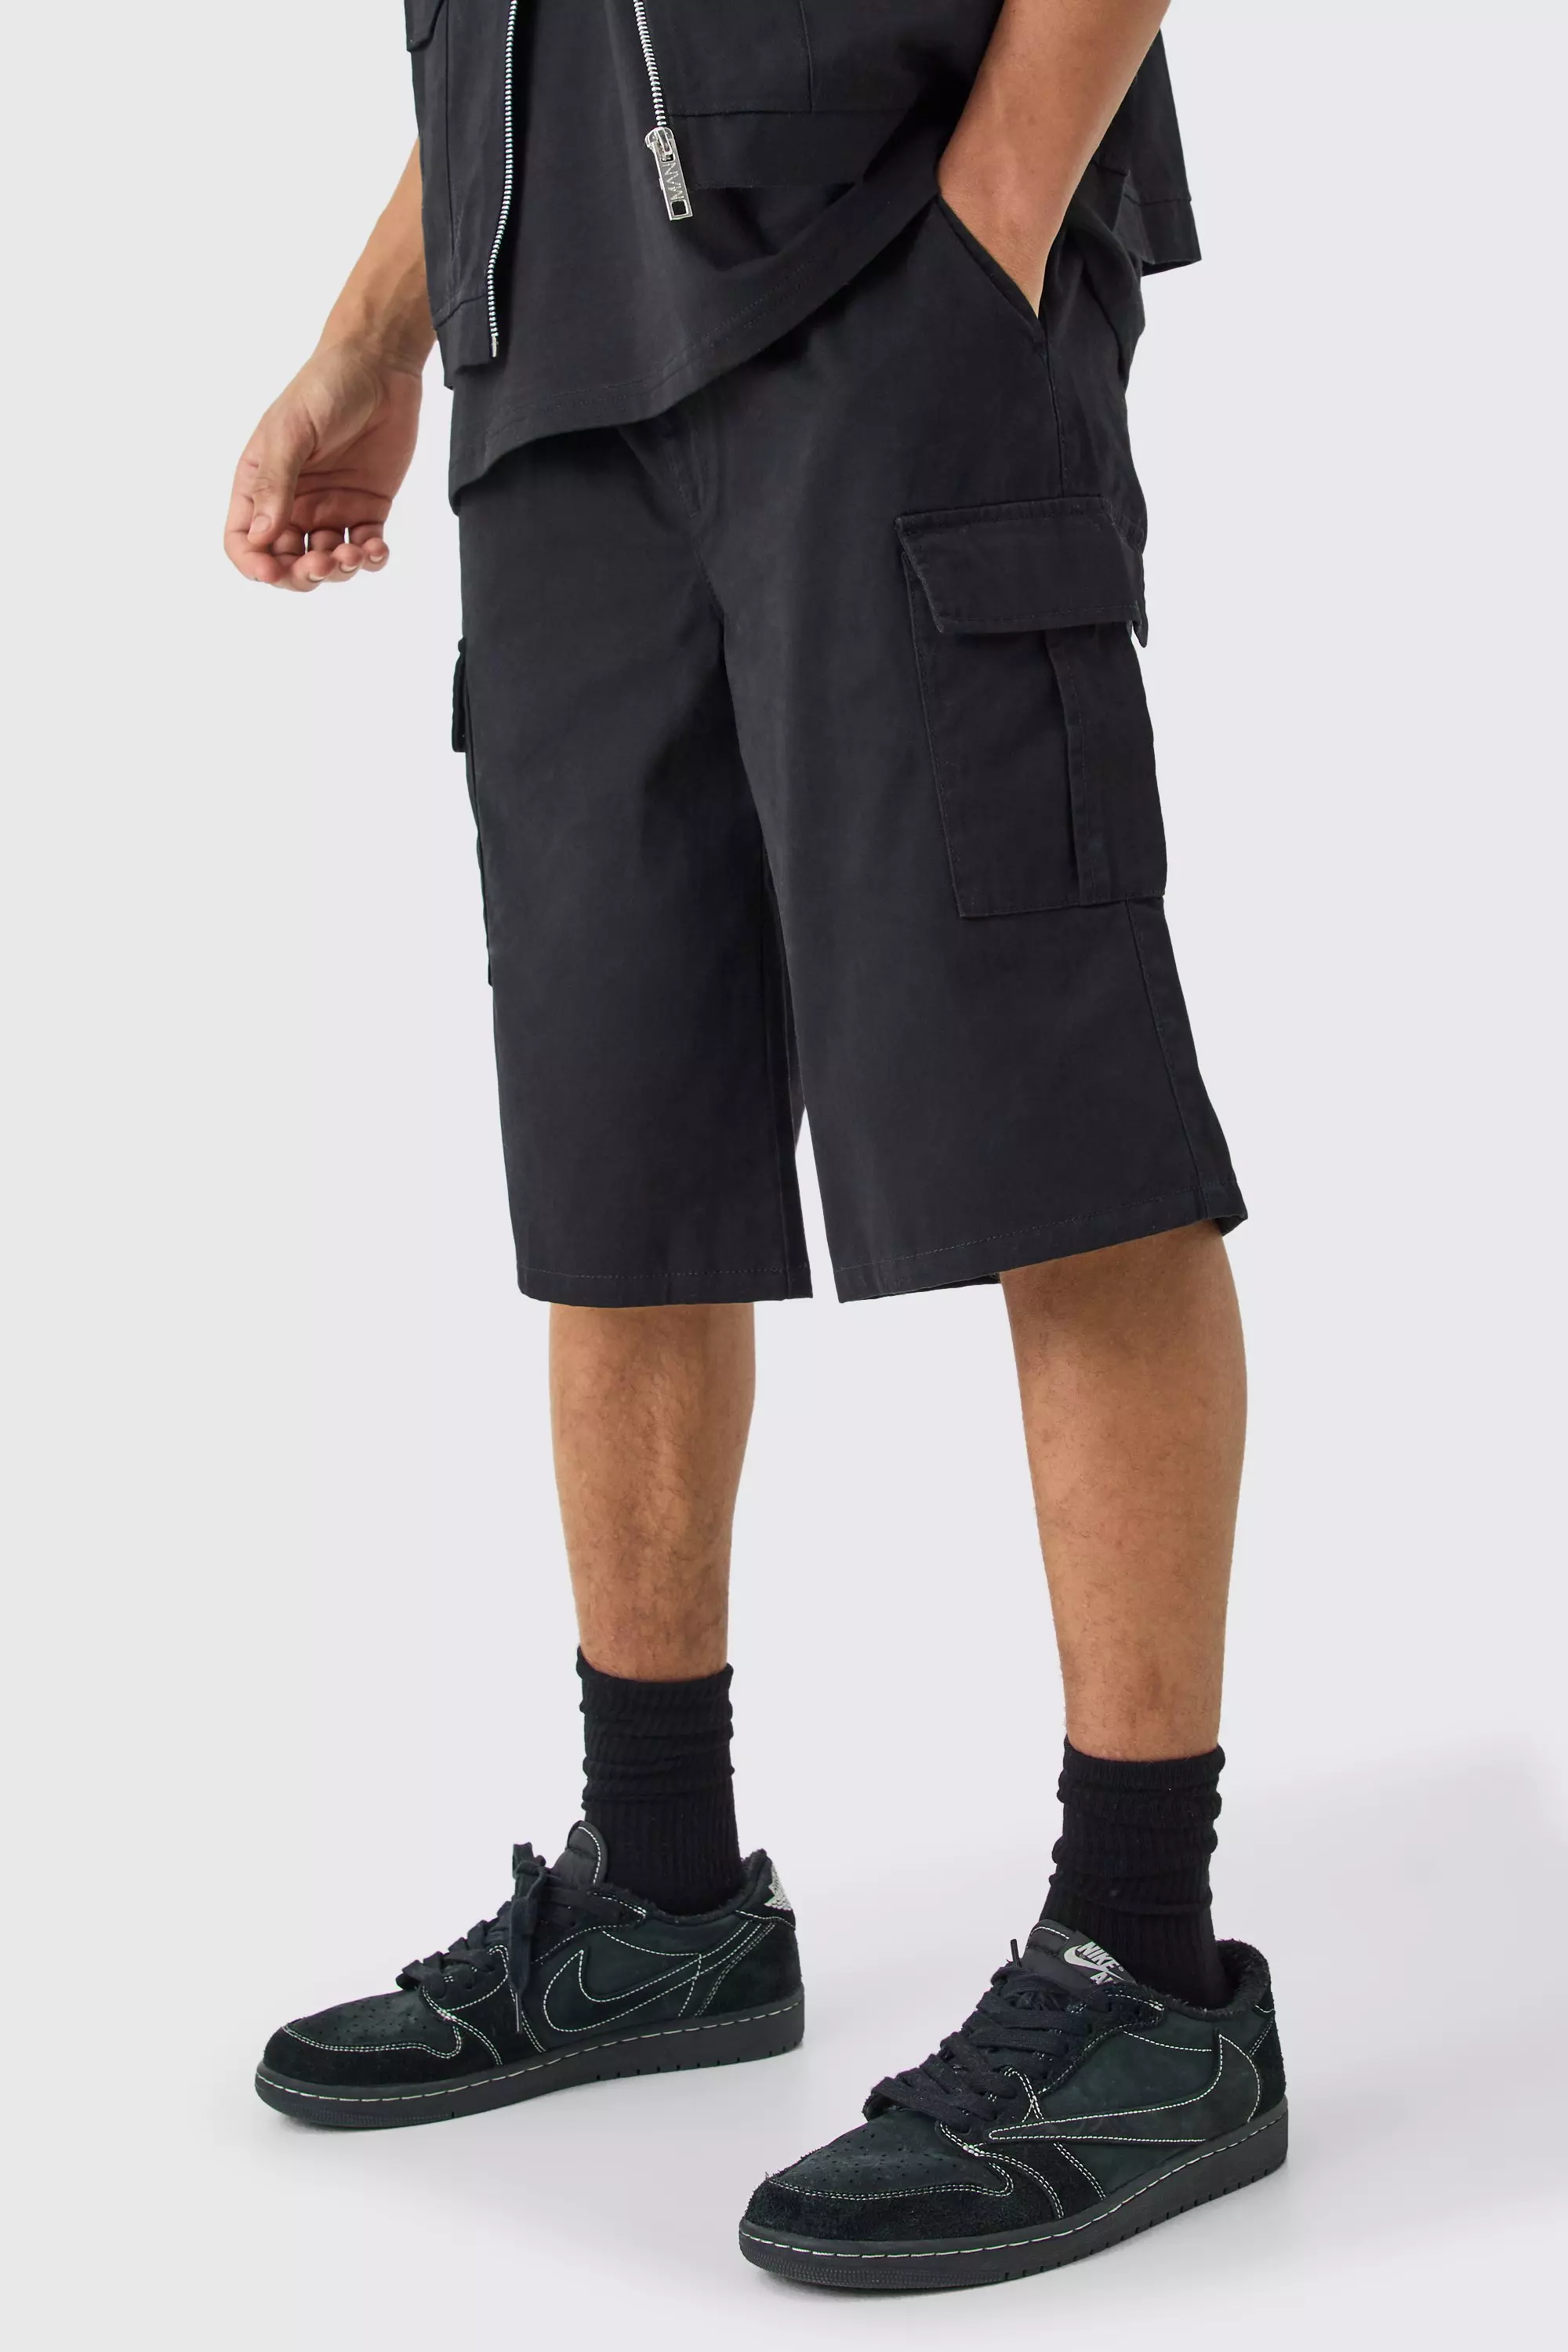 Elastic Waist Black Relaxed Fit Longer Length Cargo Shorts Black